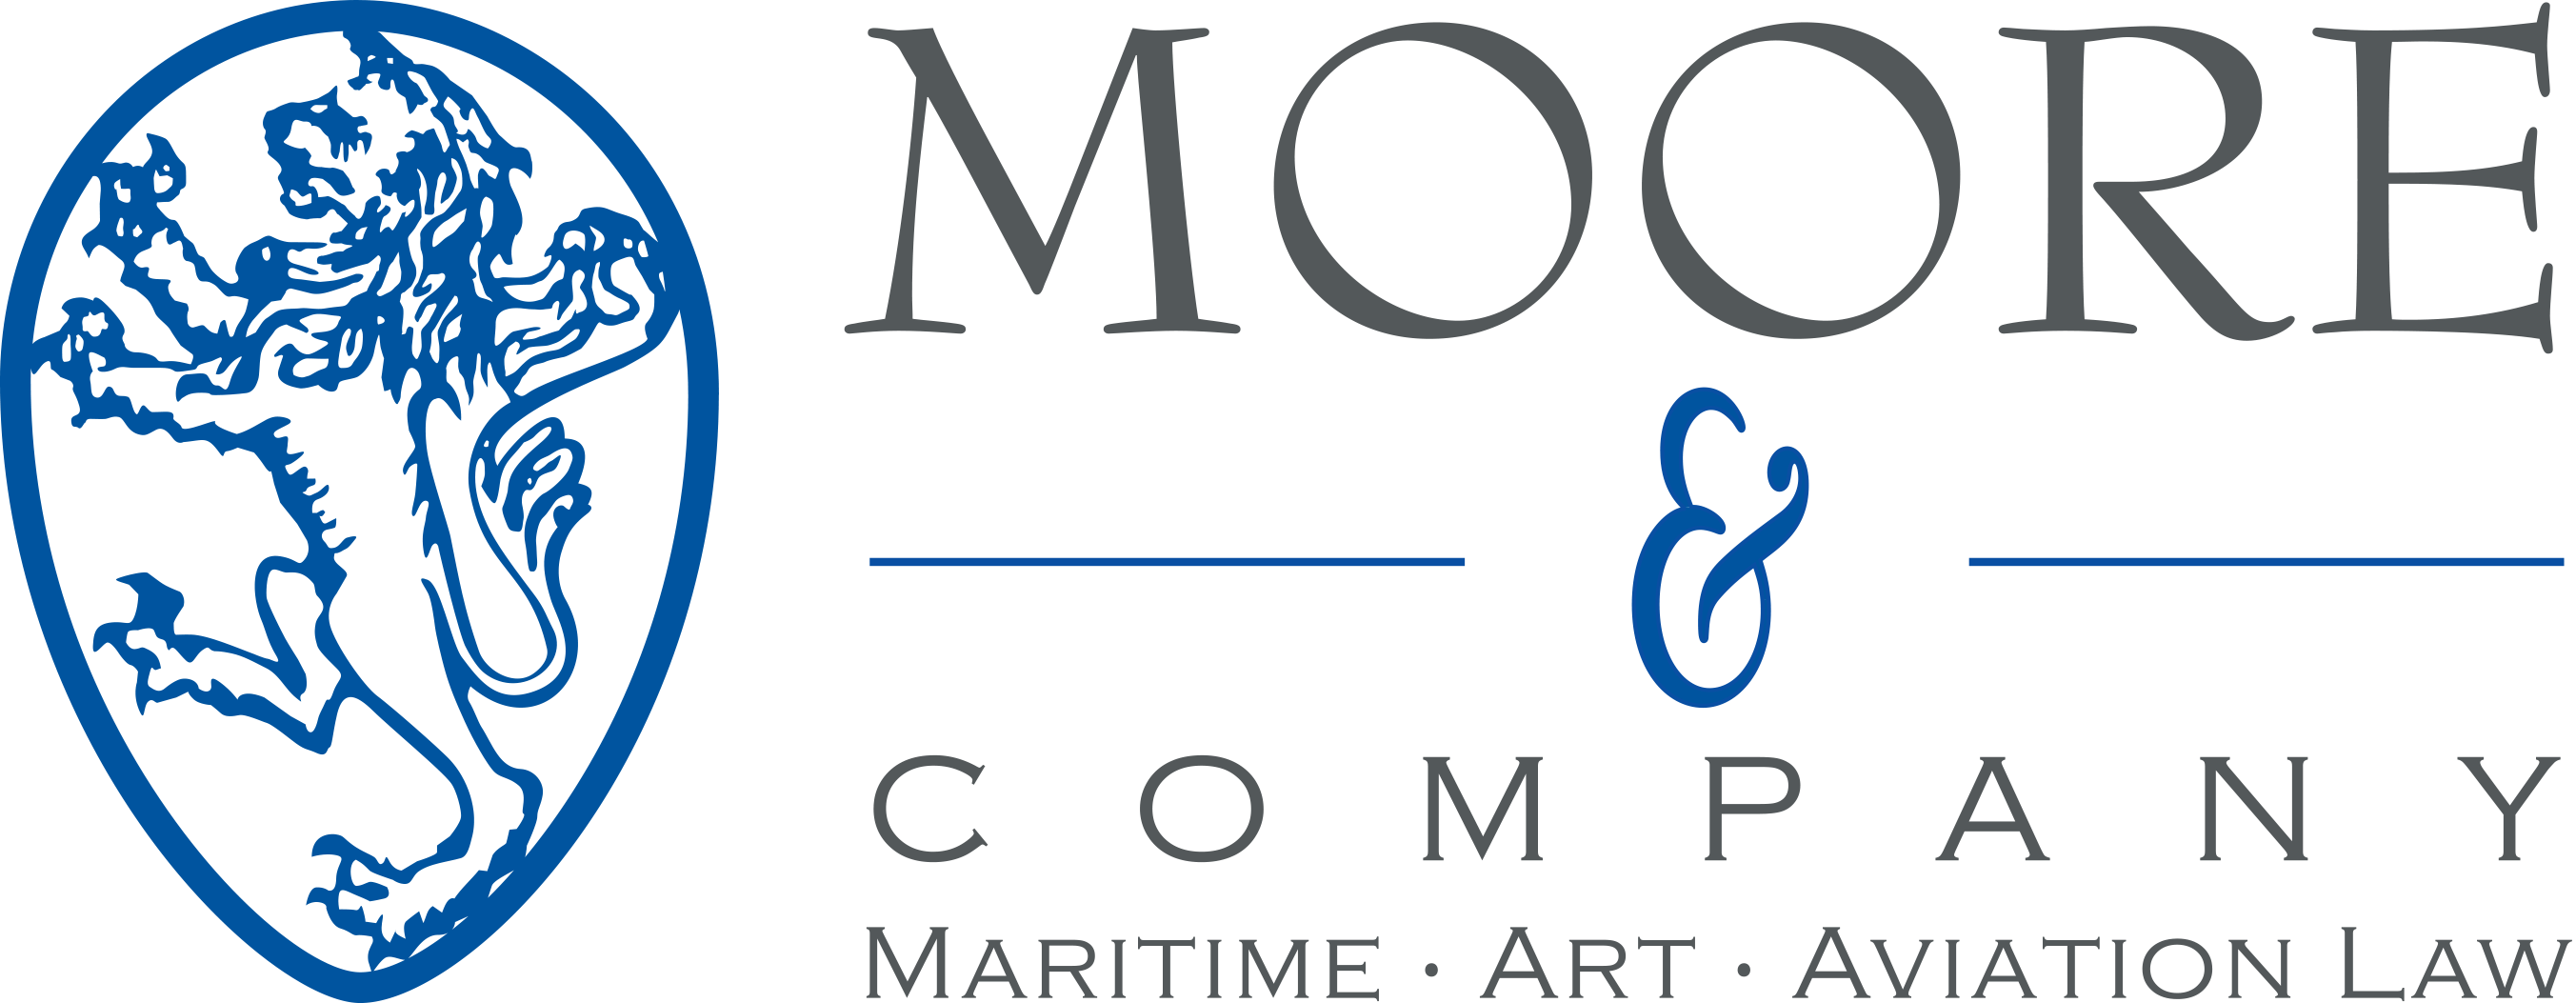 Moore & Co. P.A.